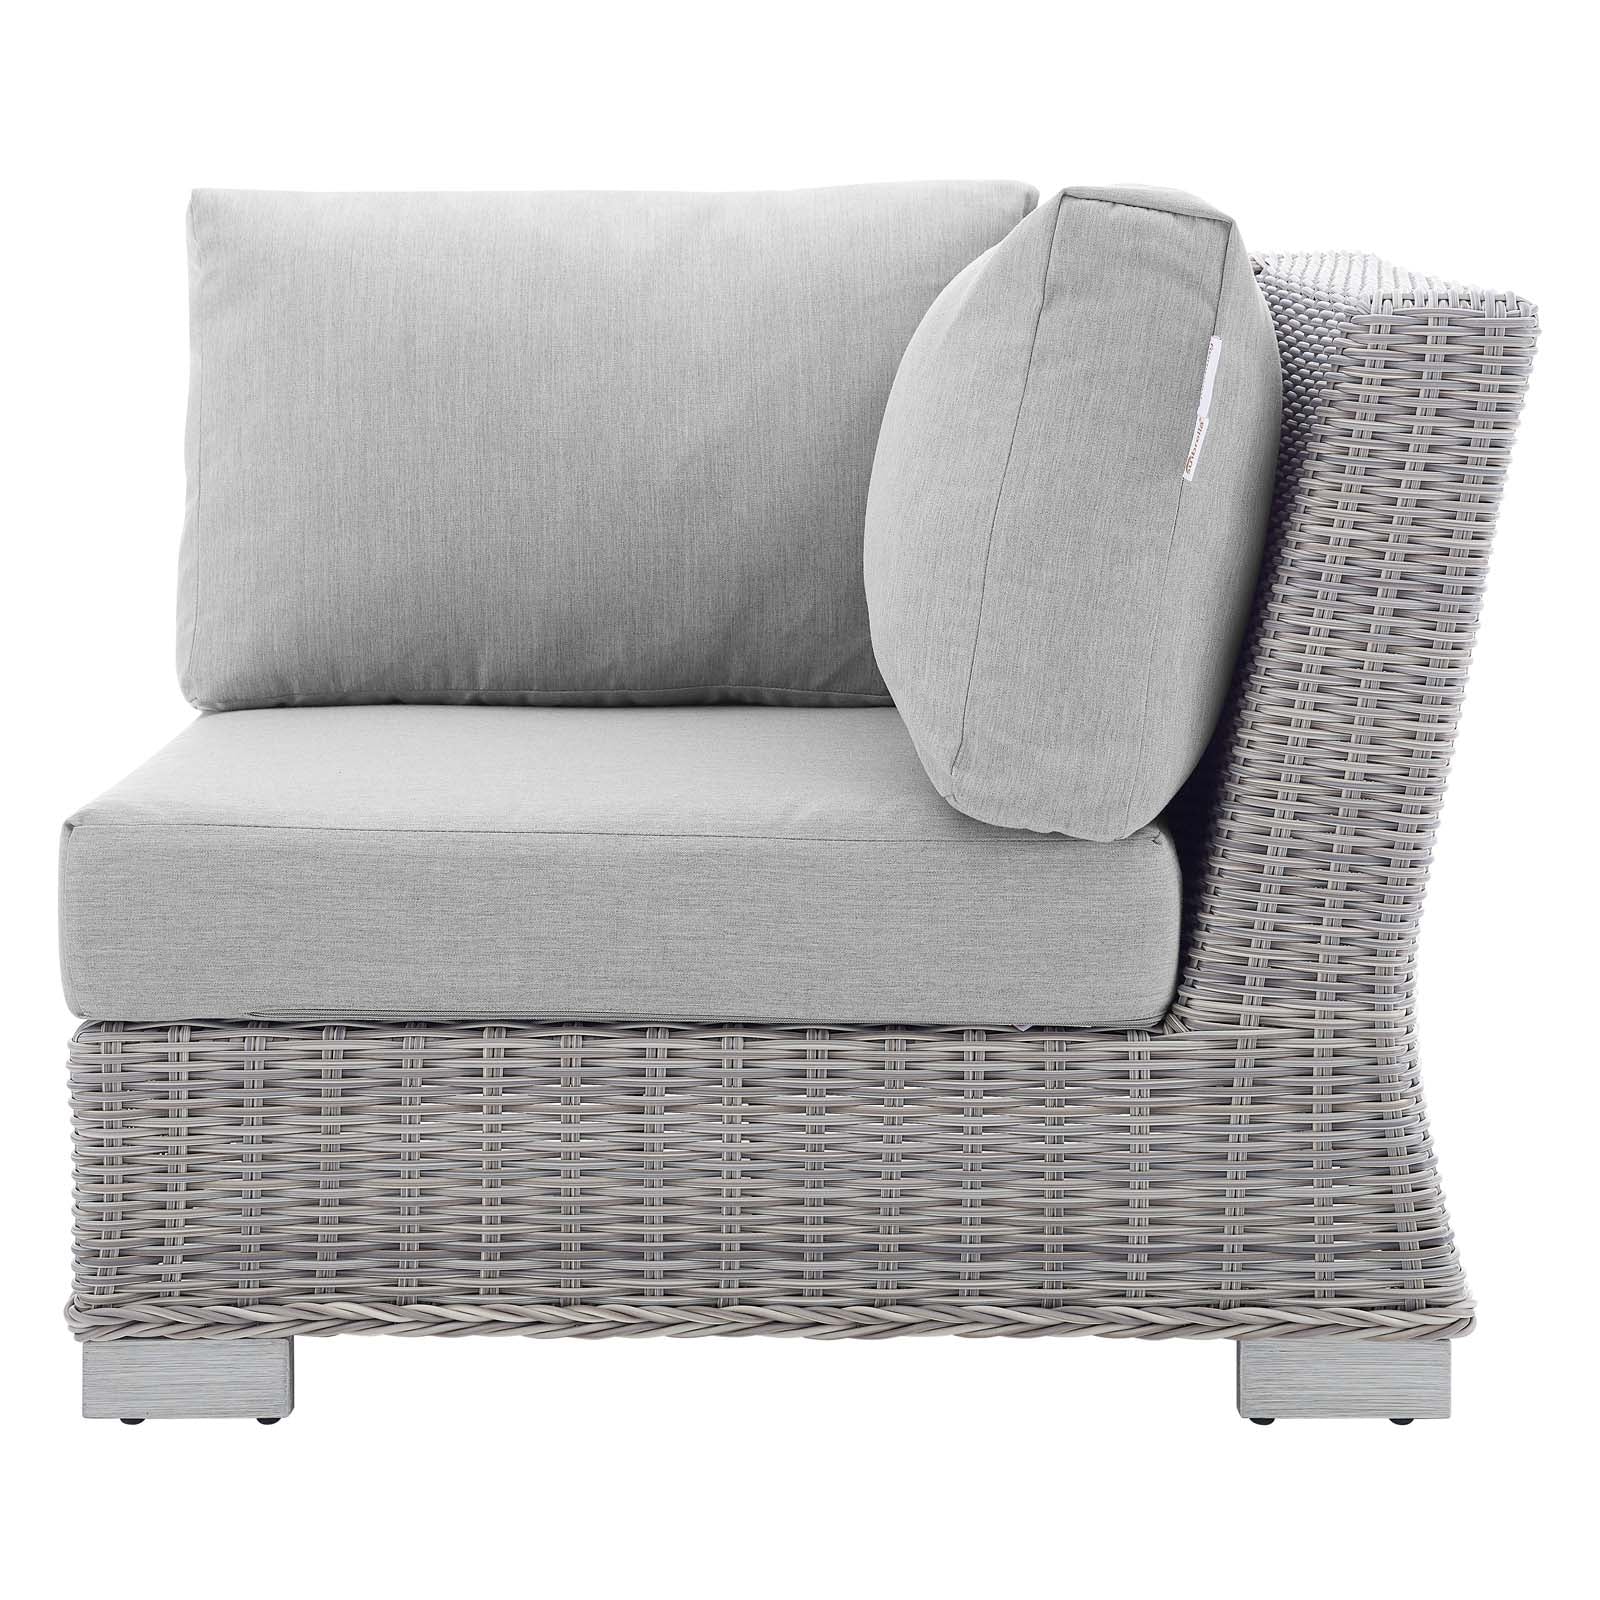 Conway Sunbrella® Outdoor Patio Wicker Rattan Corner Chair-Outdoor Corner Chair-Modway-Wall2Wall Furnishings